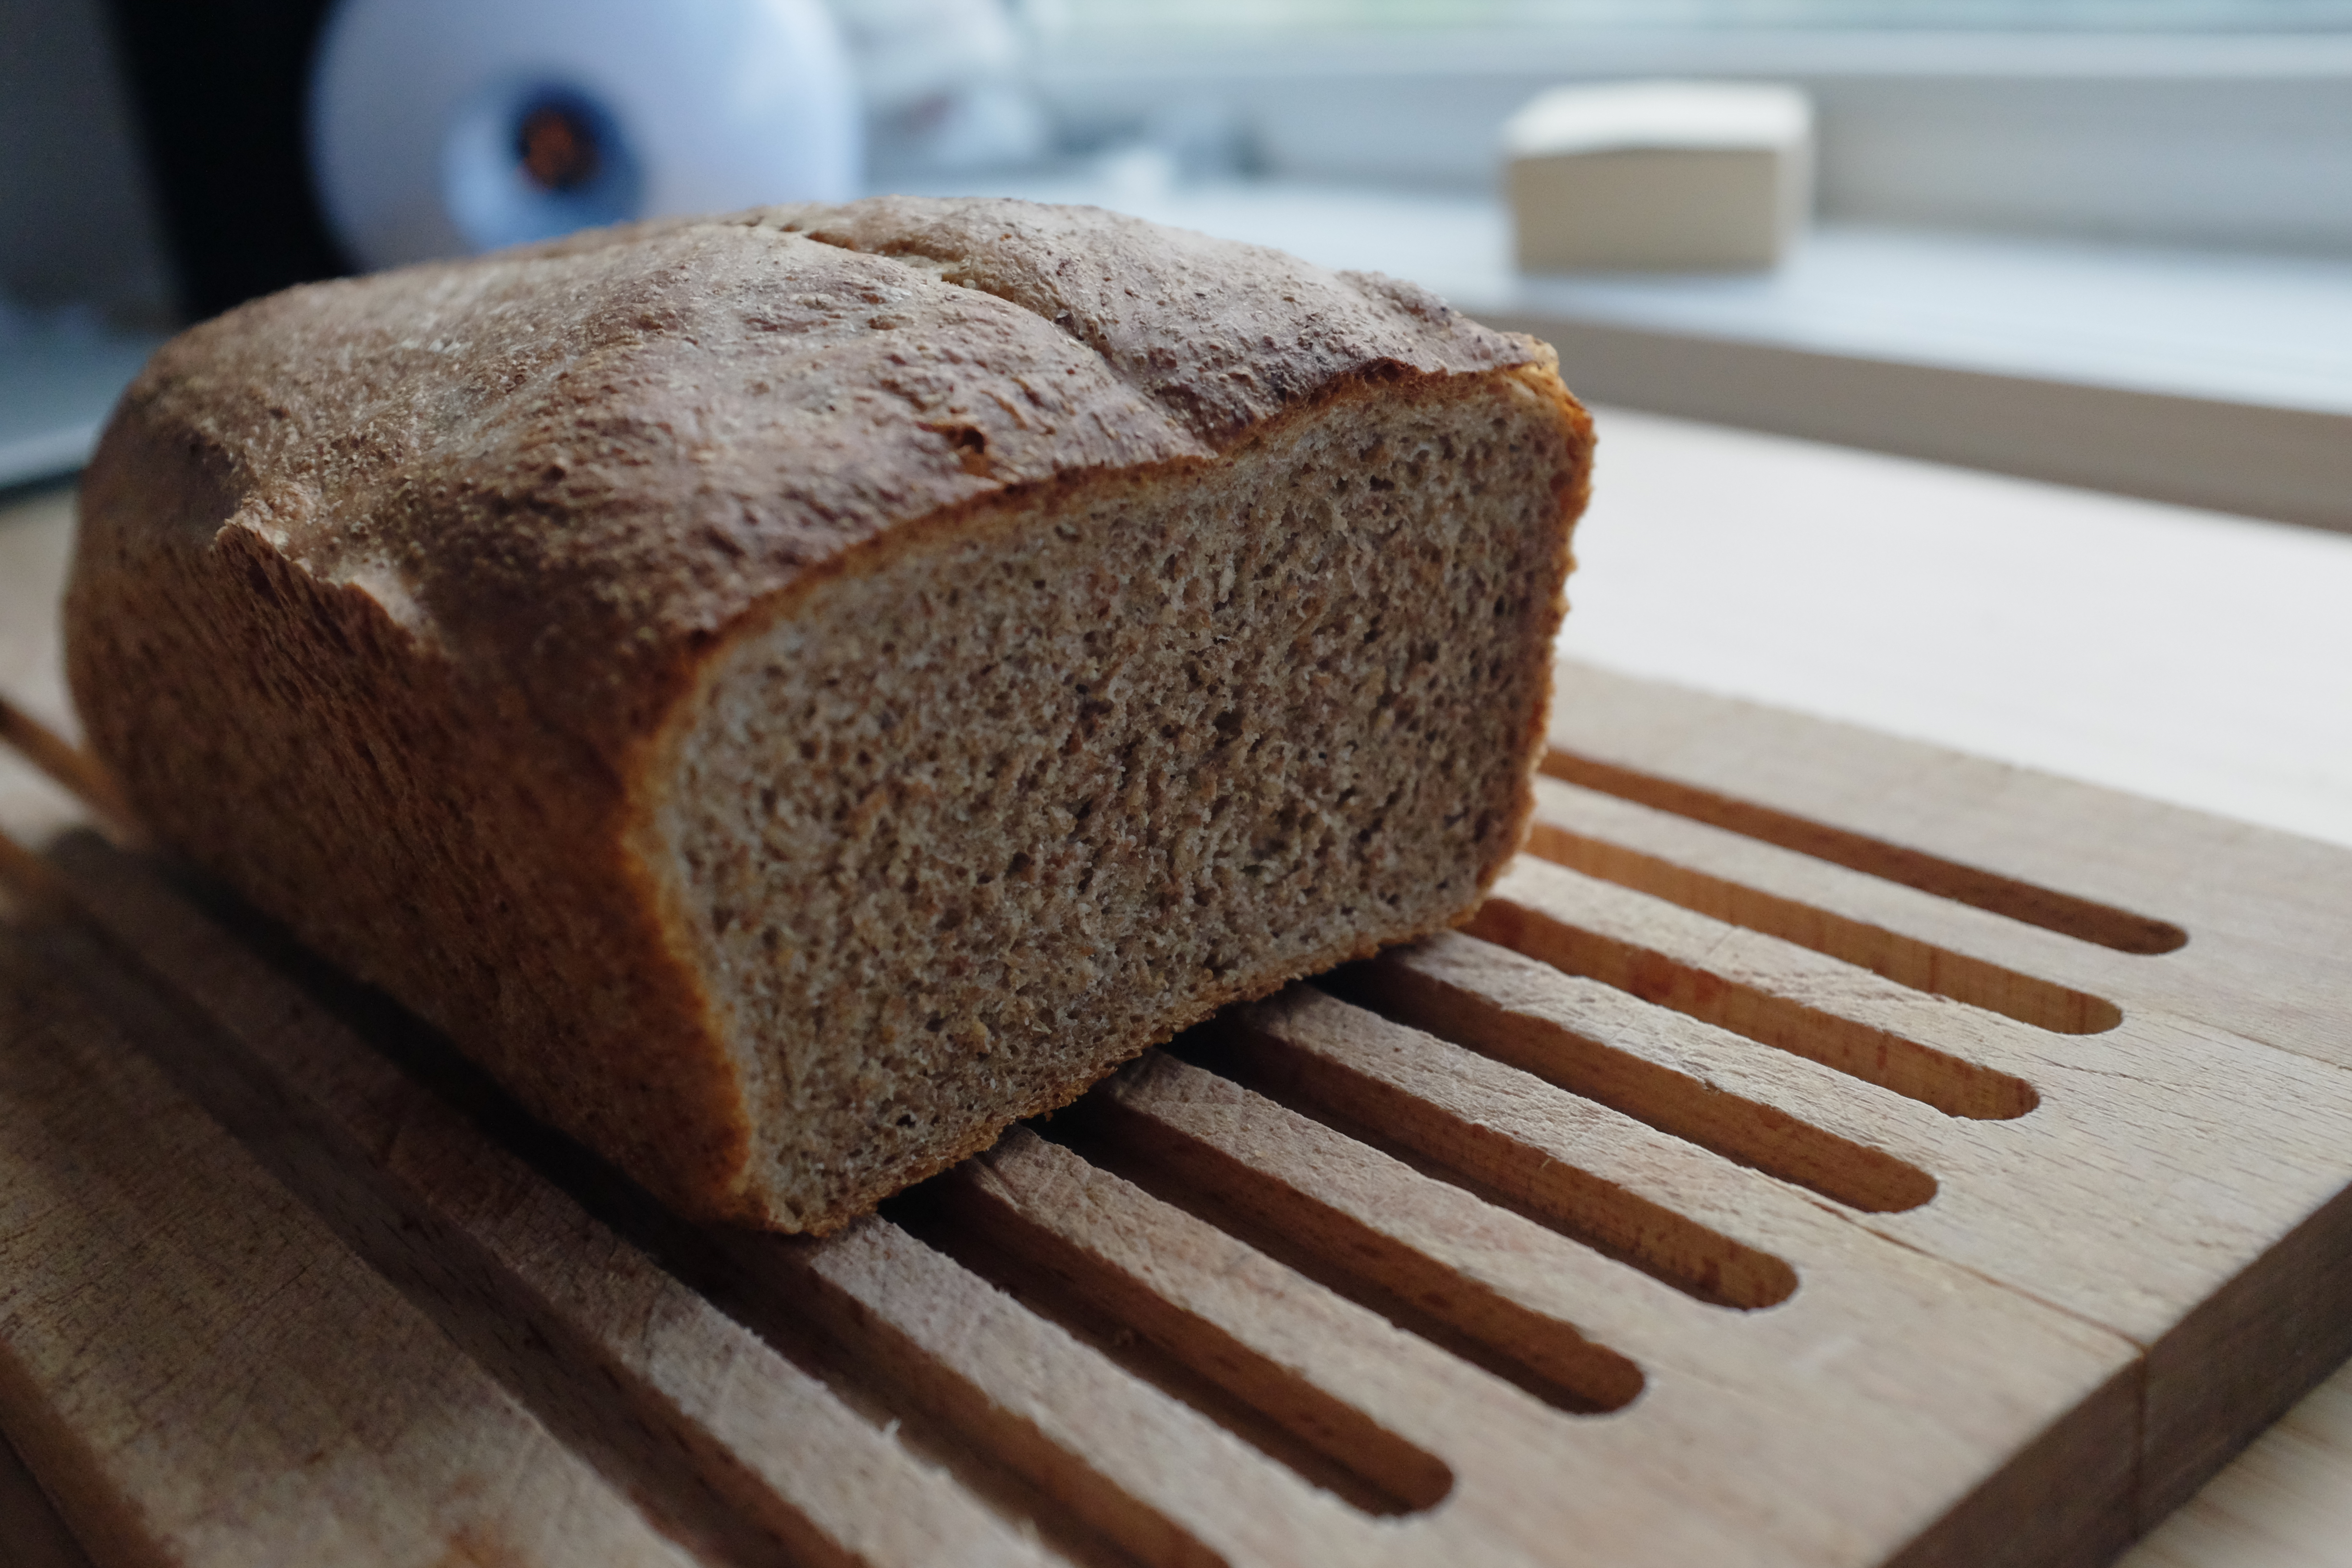 An image of a bread called “Hartog Volkoren”